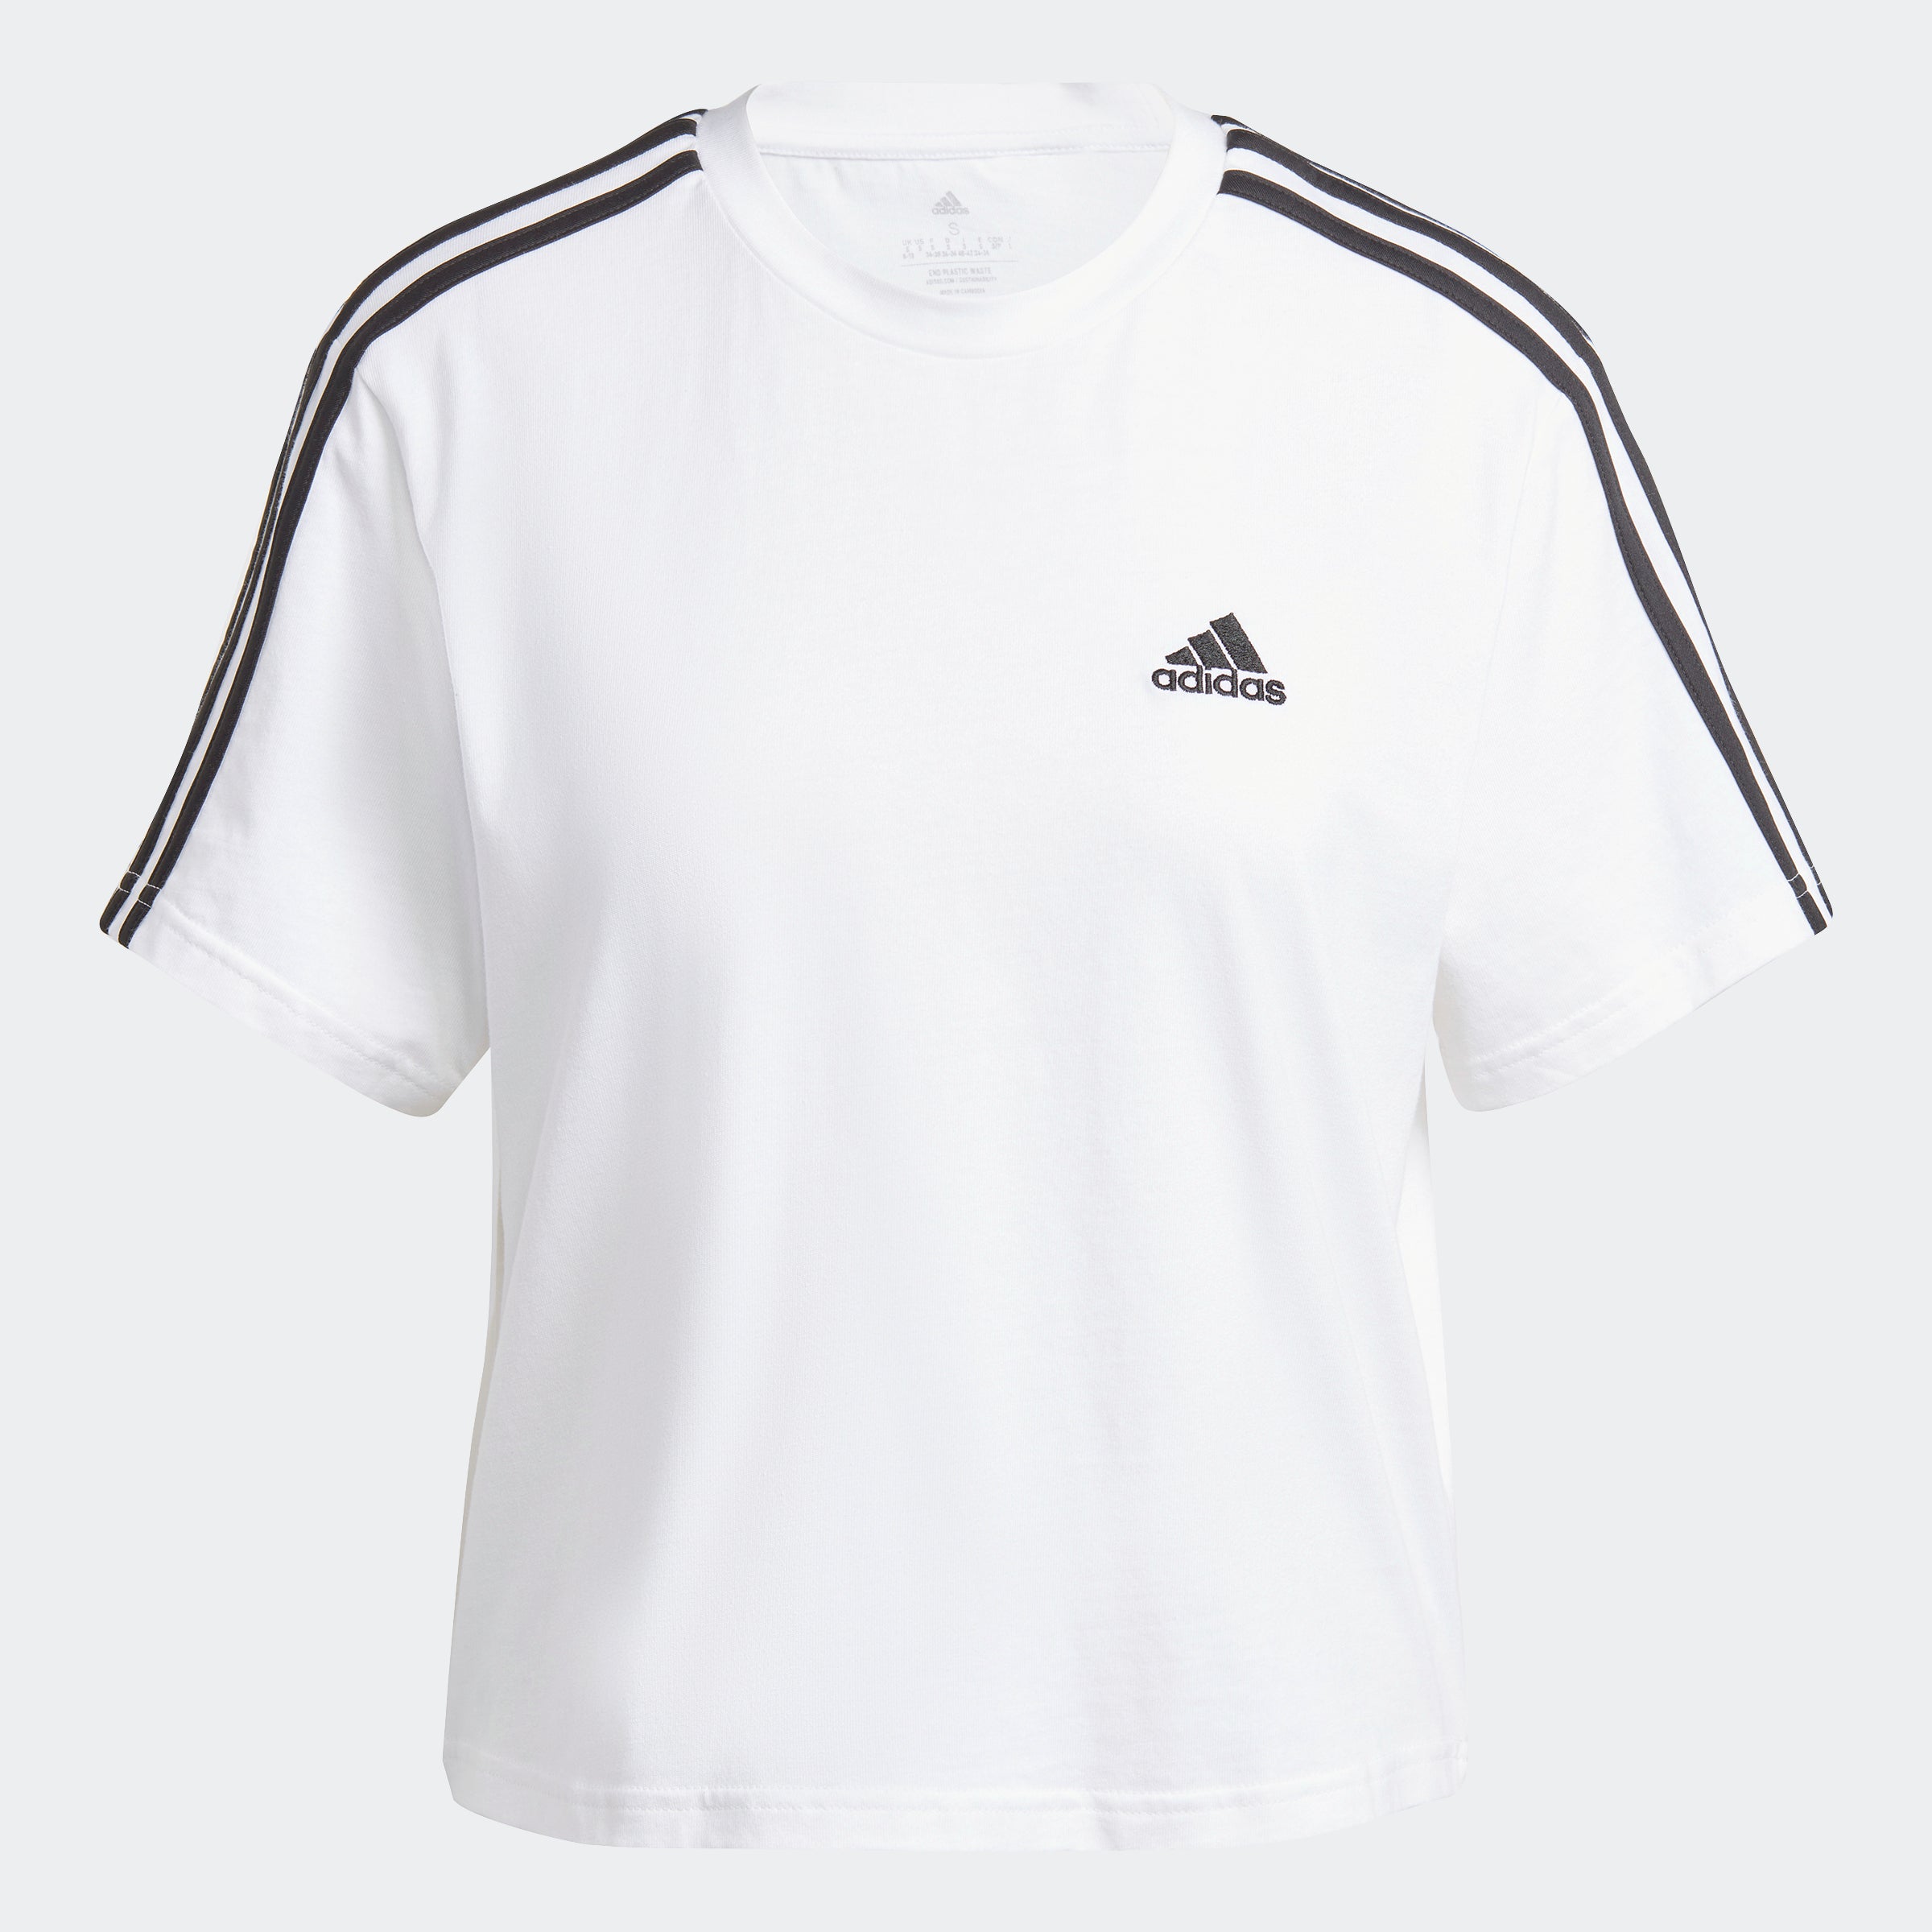 Adidas Women's Essentials 3-Stripes Single Jersey Crop Top in White / Black